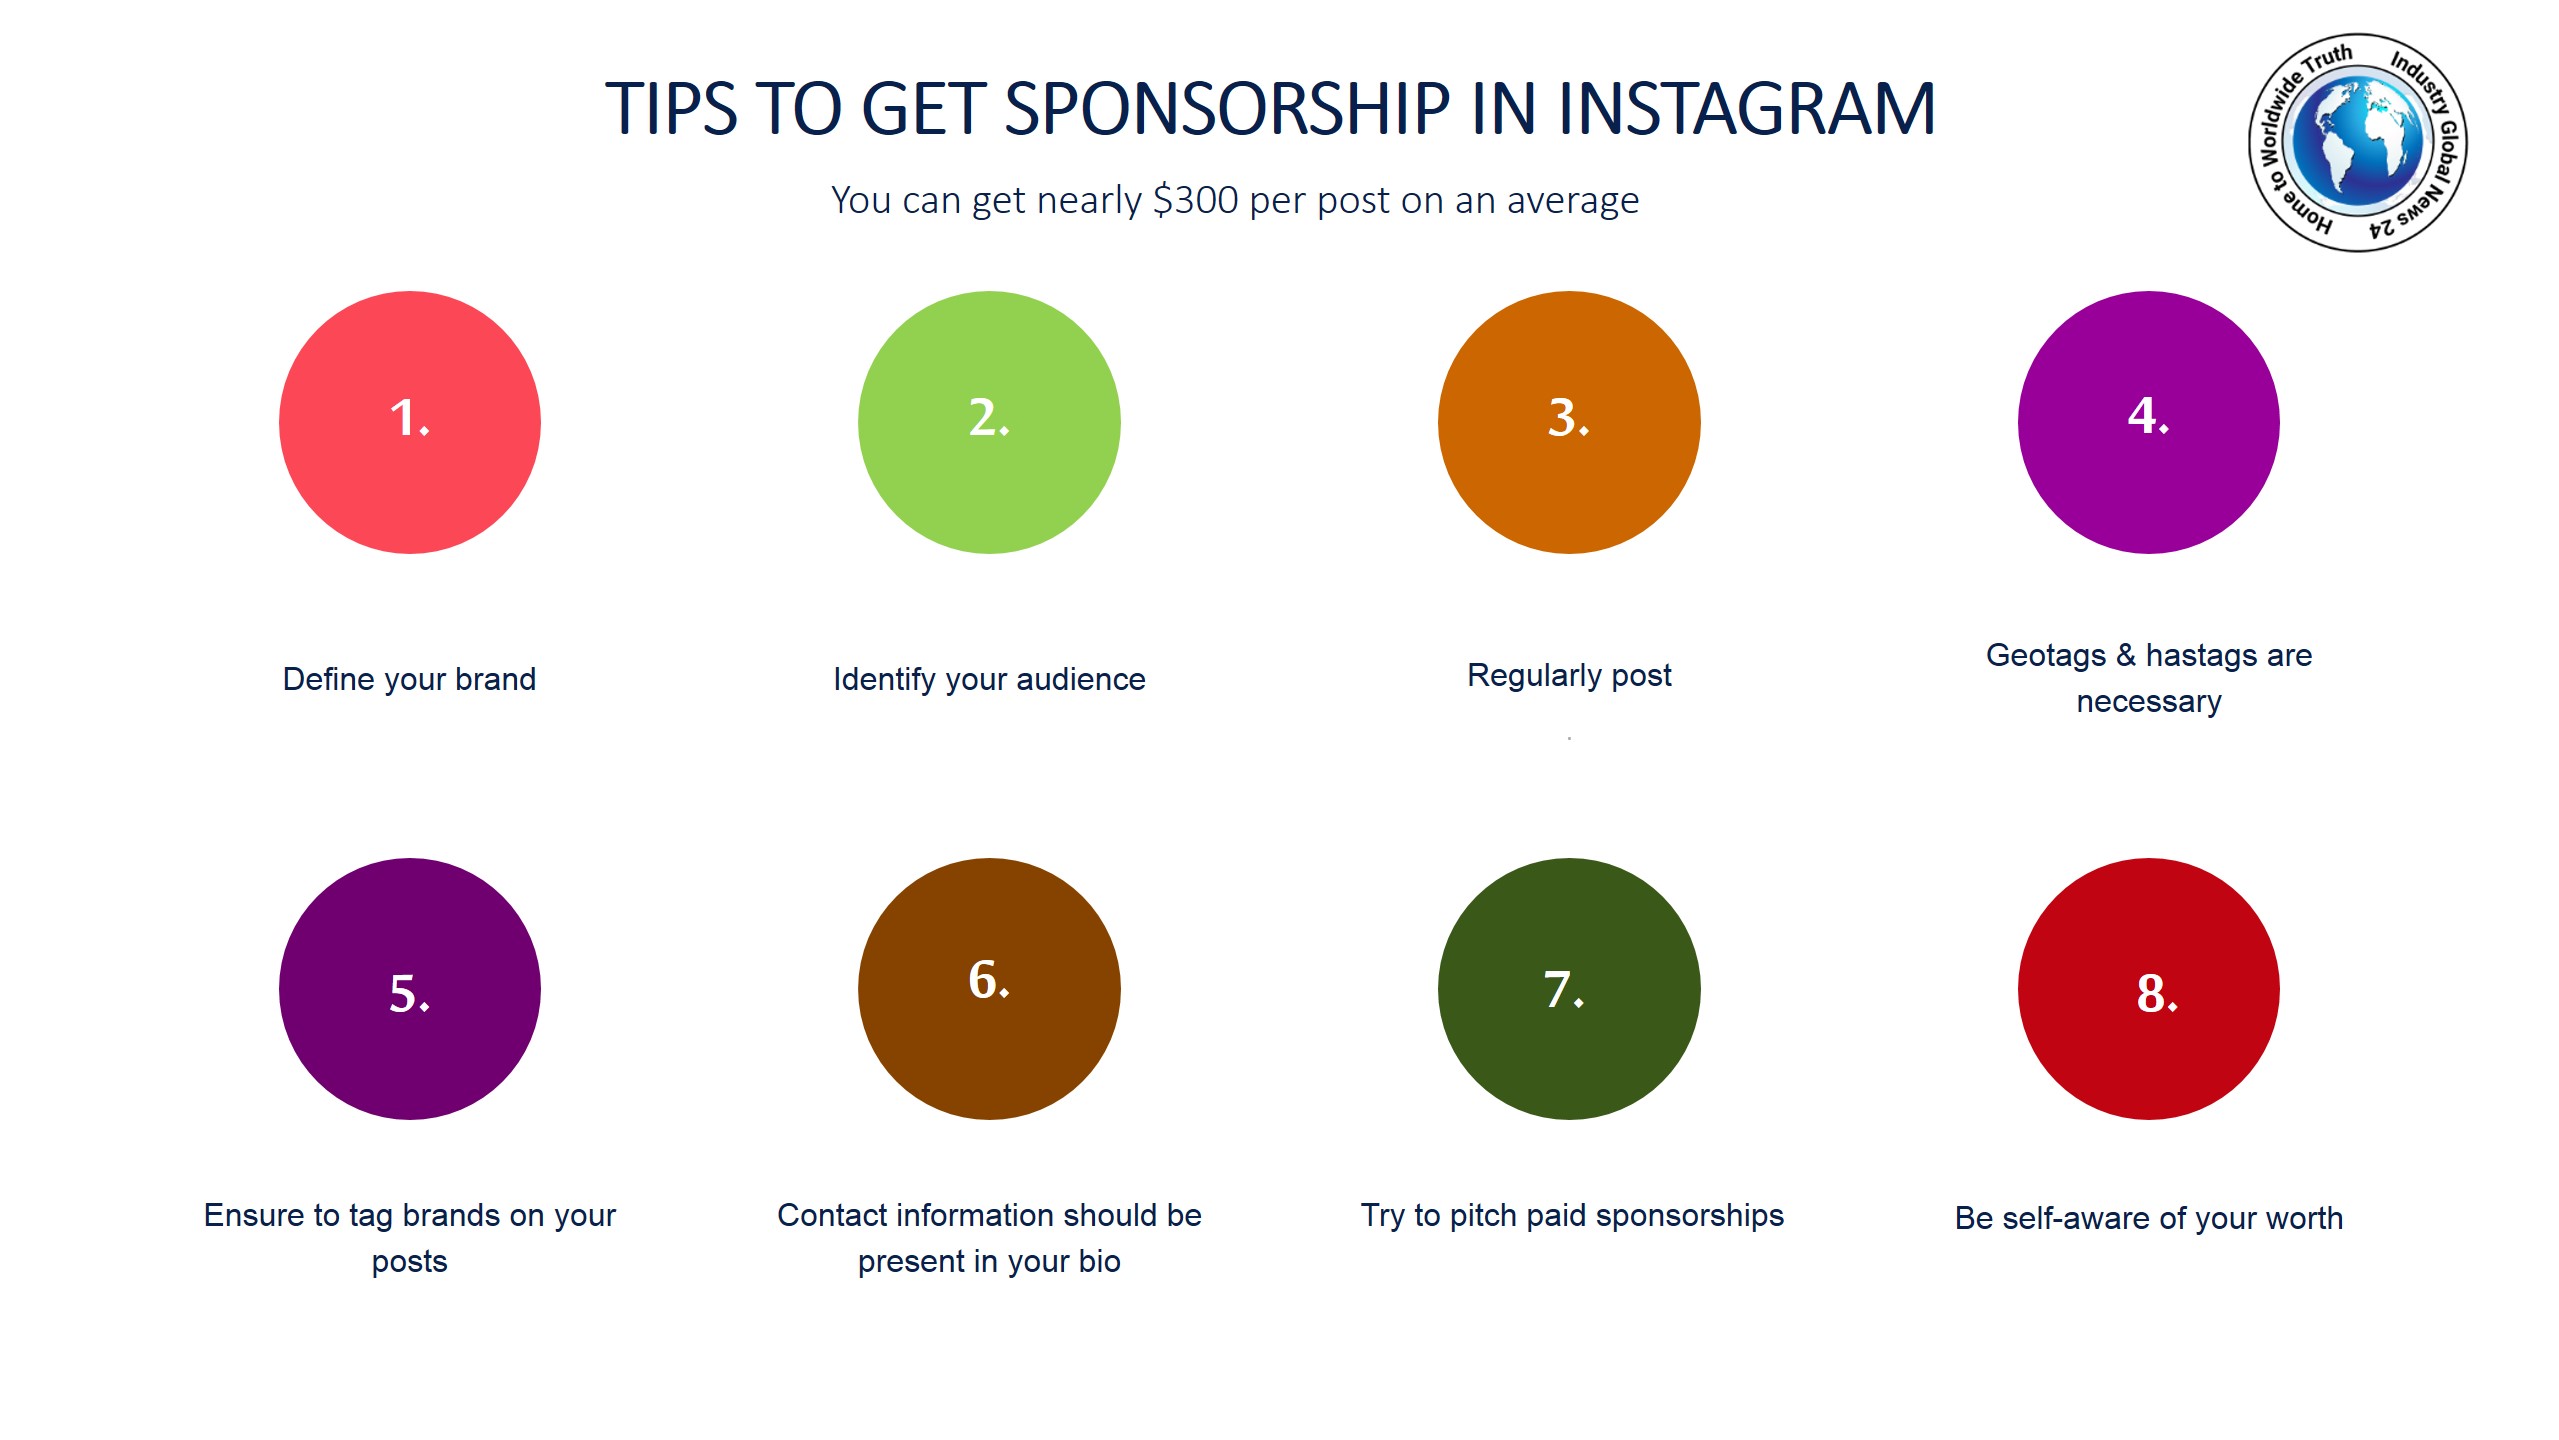 Tips to get sponsorship in Instagram